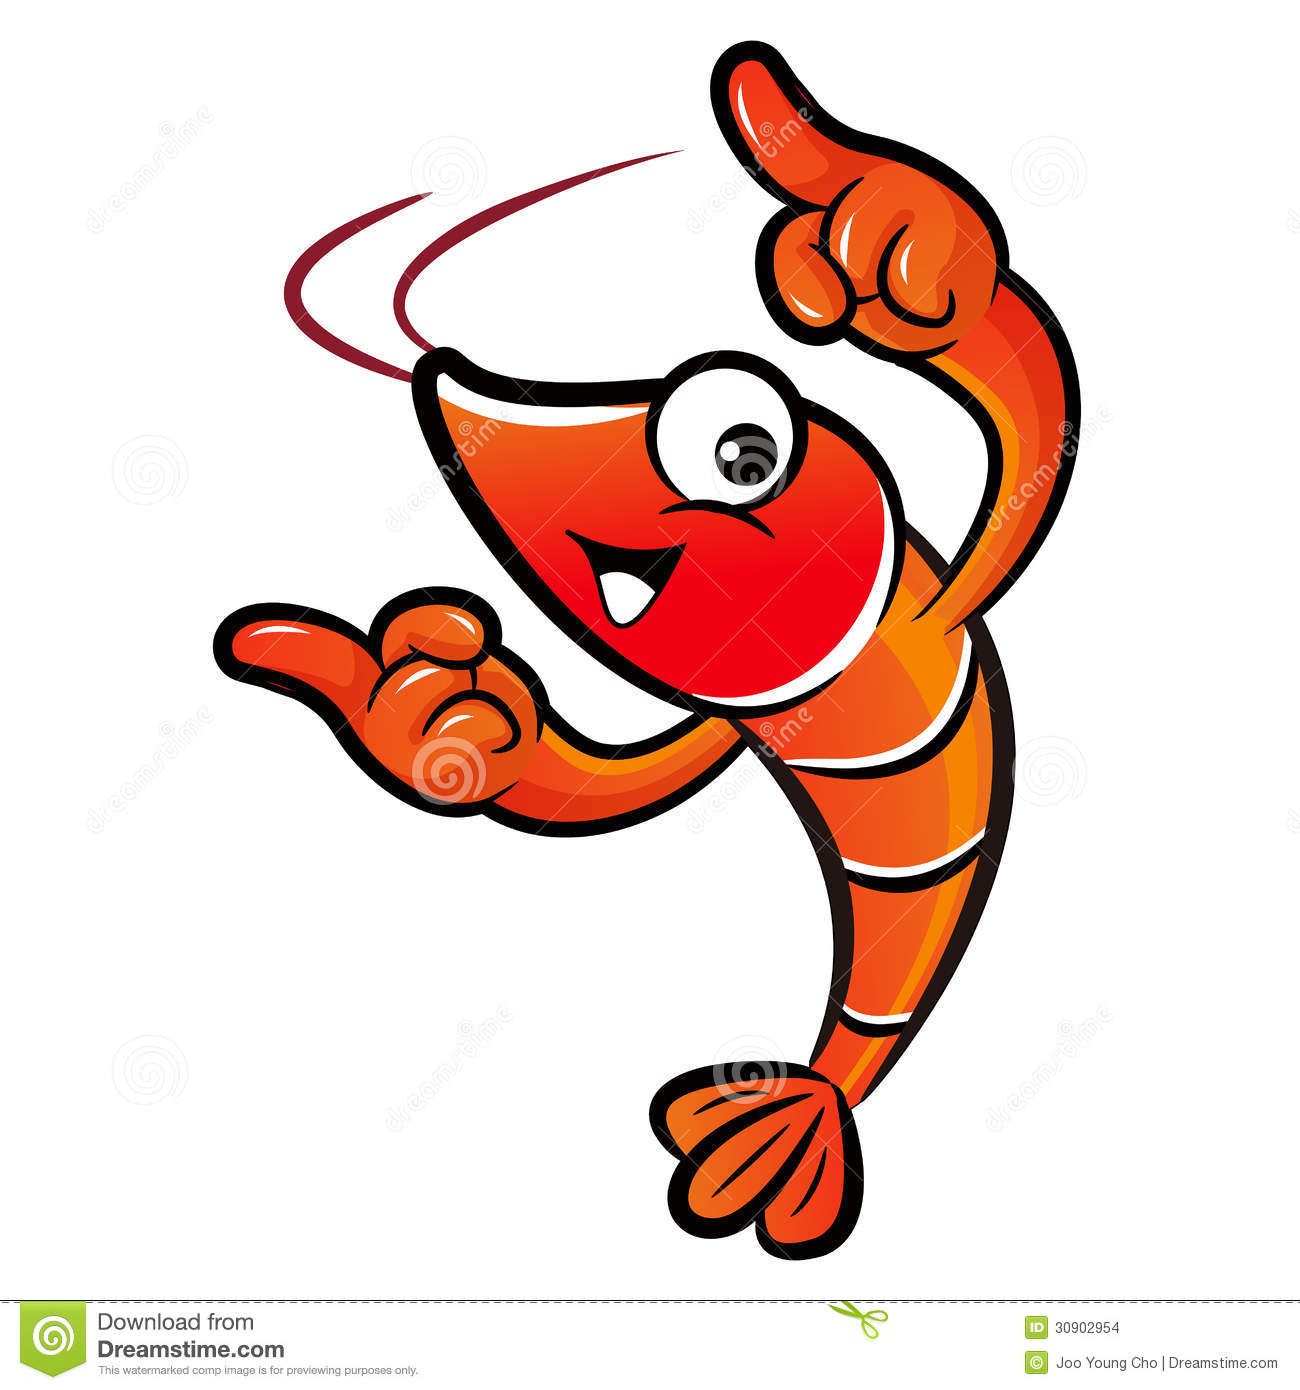 If you use our shrimp clip ar